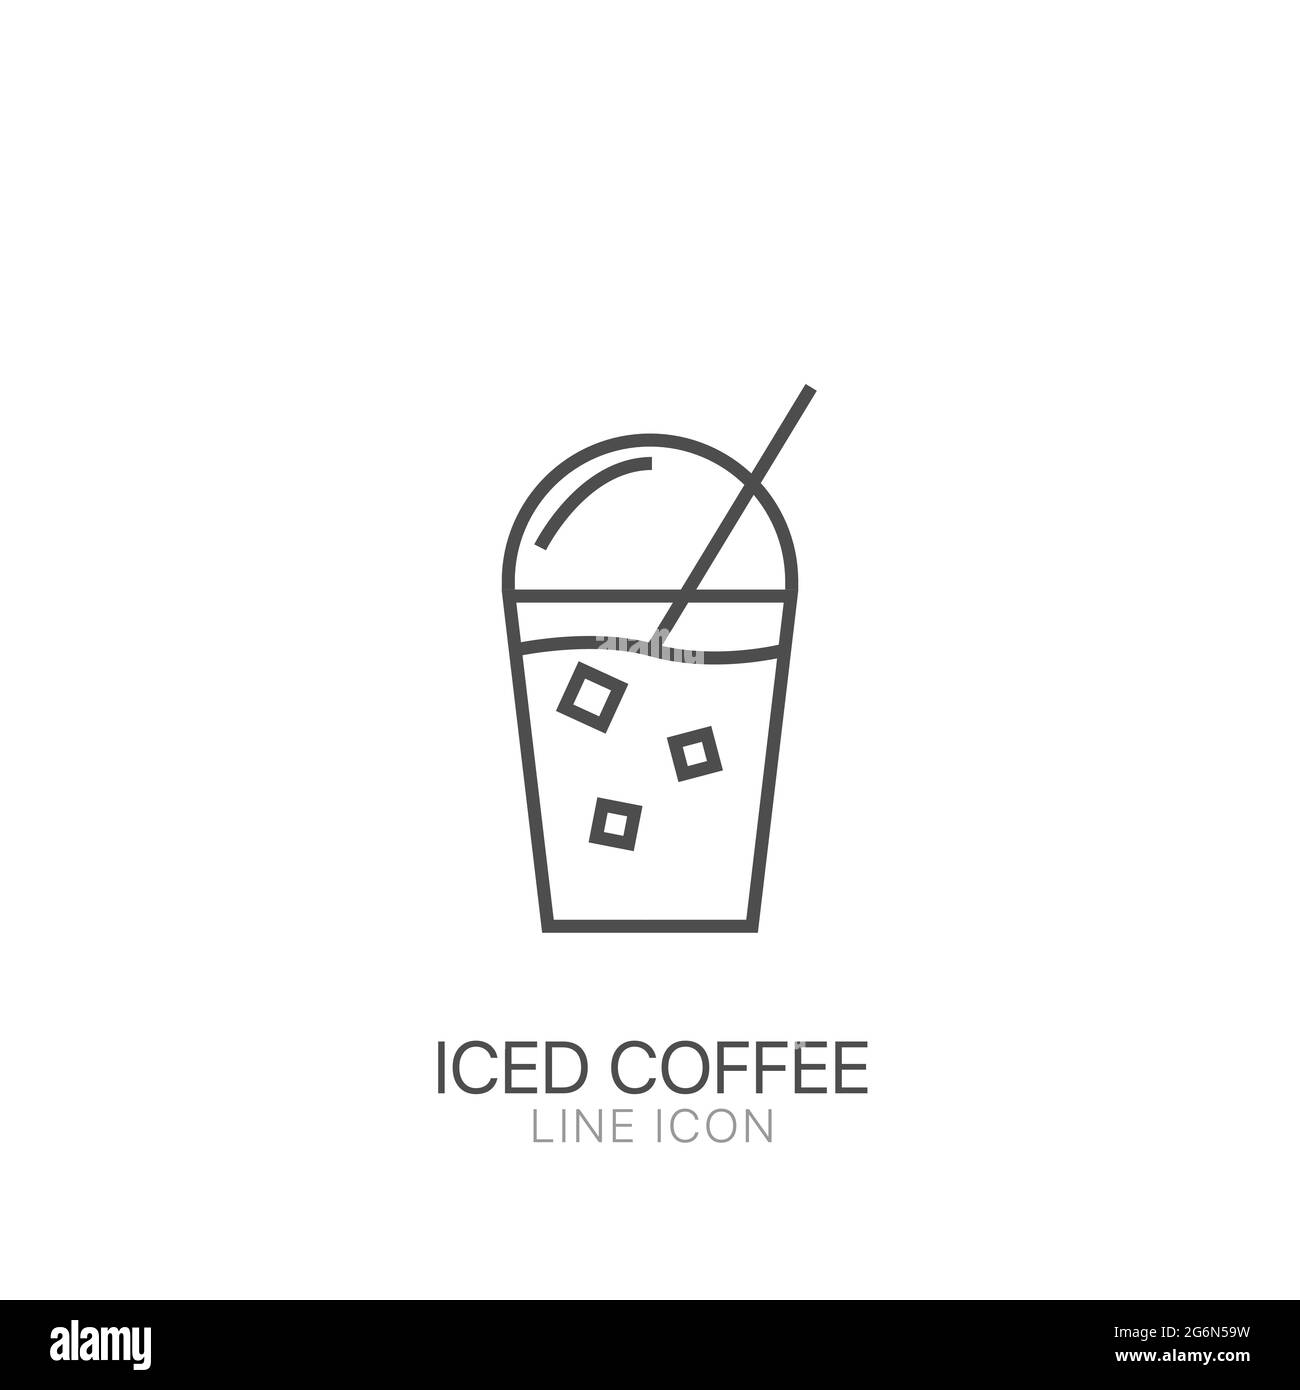 Iced coffee outline vector icon. Editable stroke Stock Vector